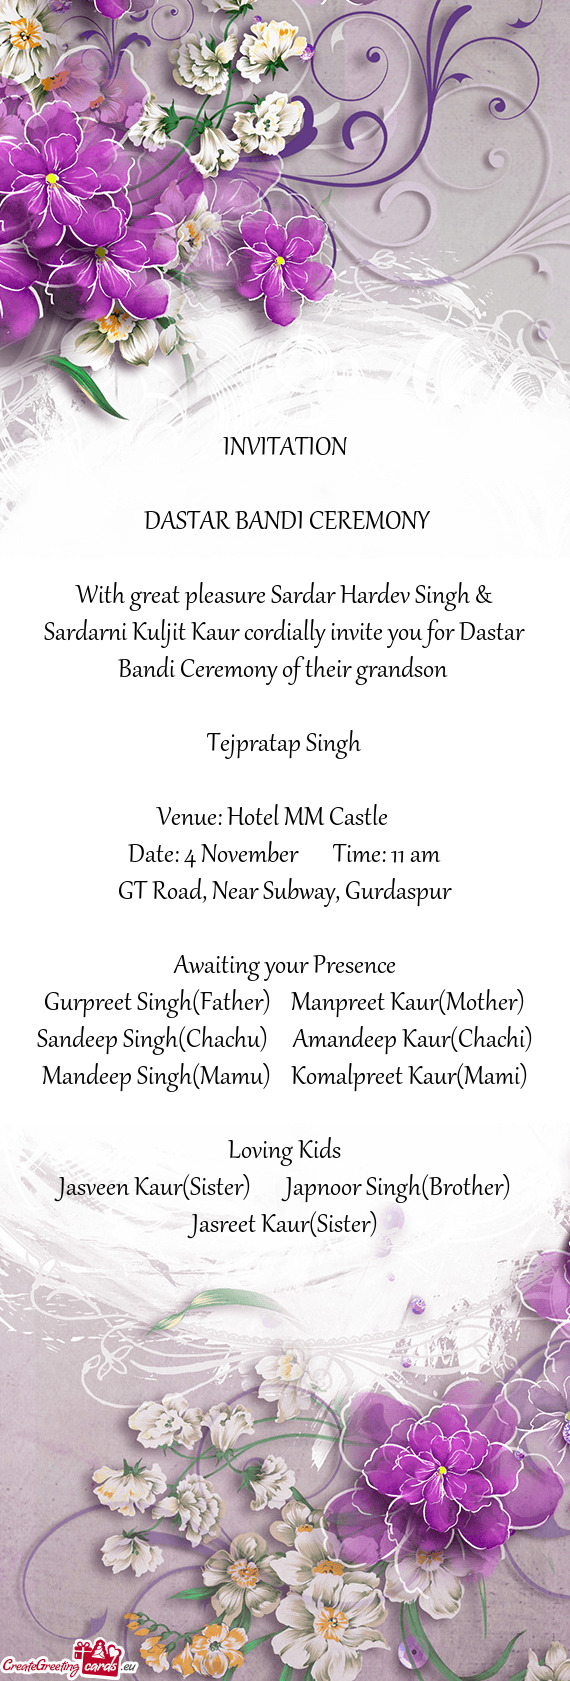 With great pleasure Sardar Hardev Singh & Sardarni Kuljit Kaur cordially invite you for Dastar Bandi